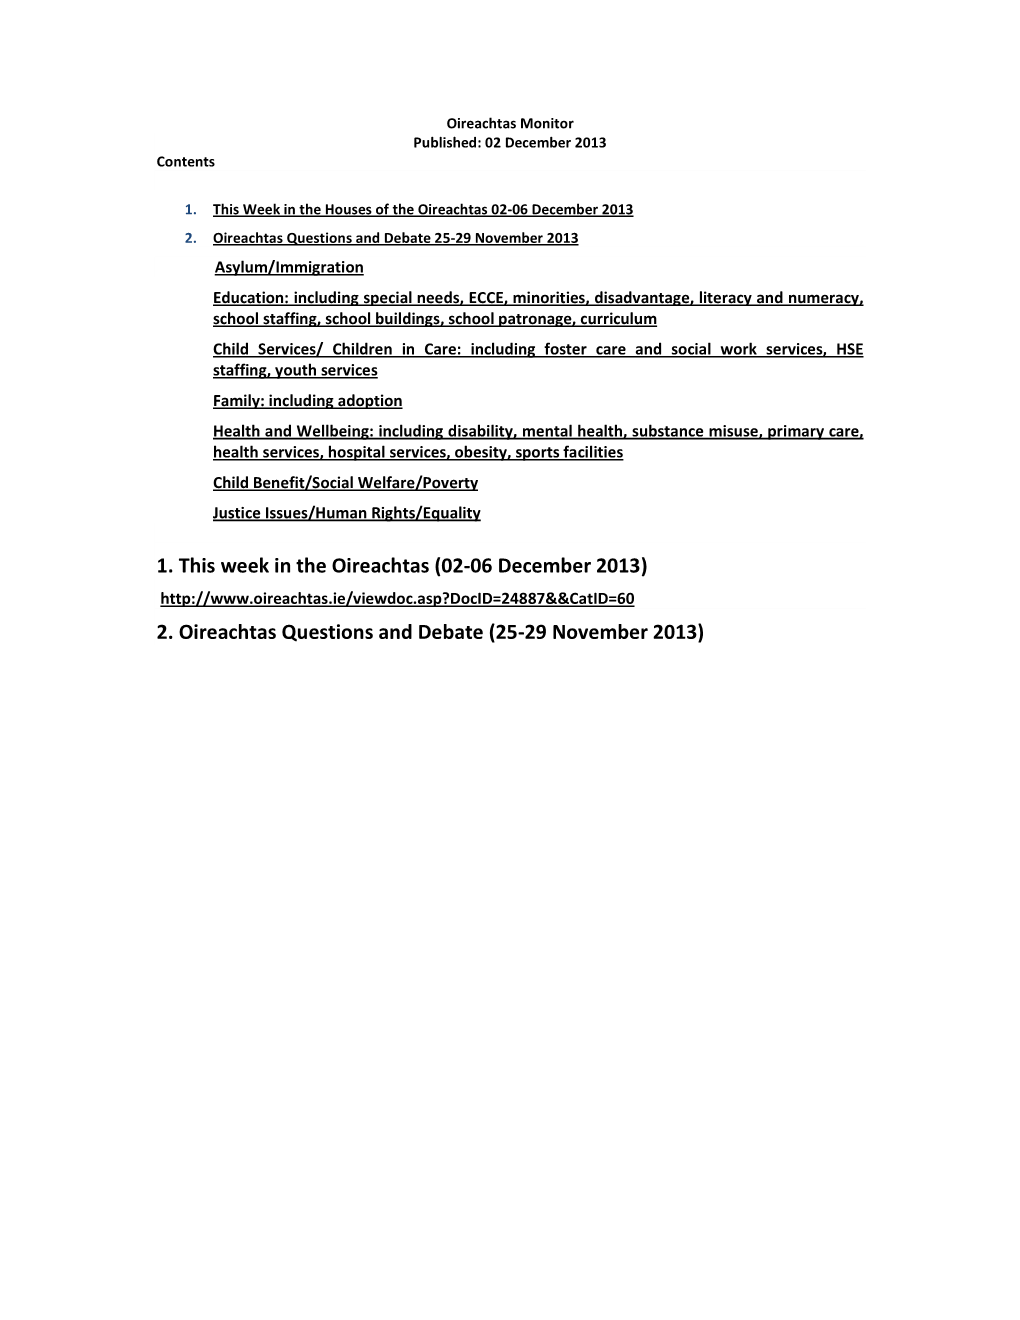 2. Oireachtas Questions and Debate (25-29 November 2013) Asylum/Immigration